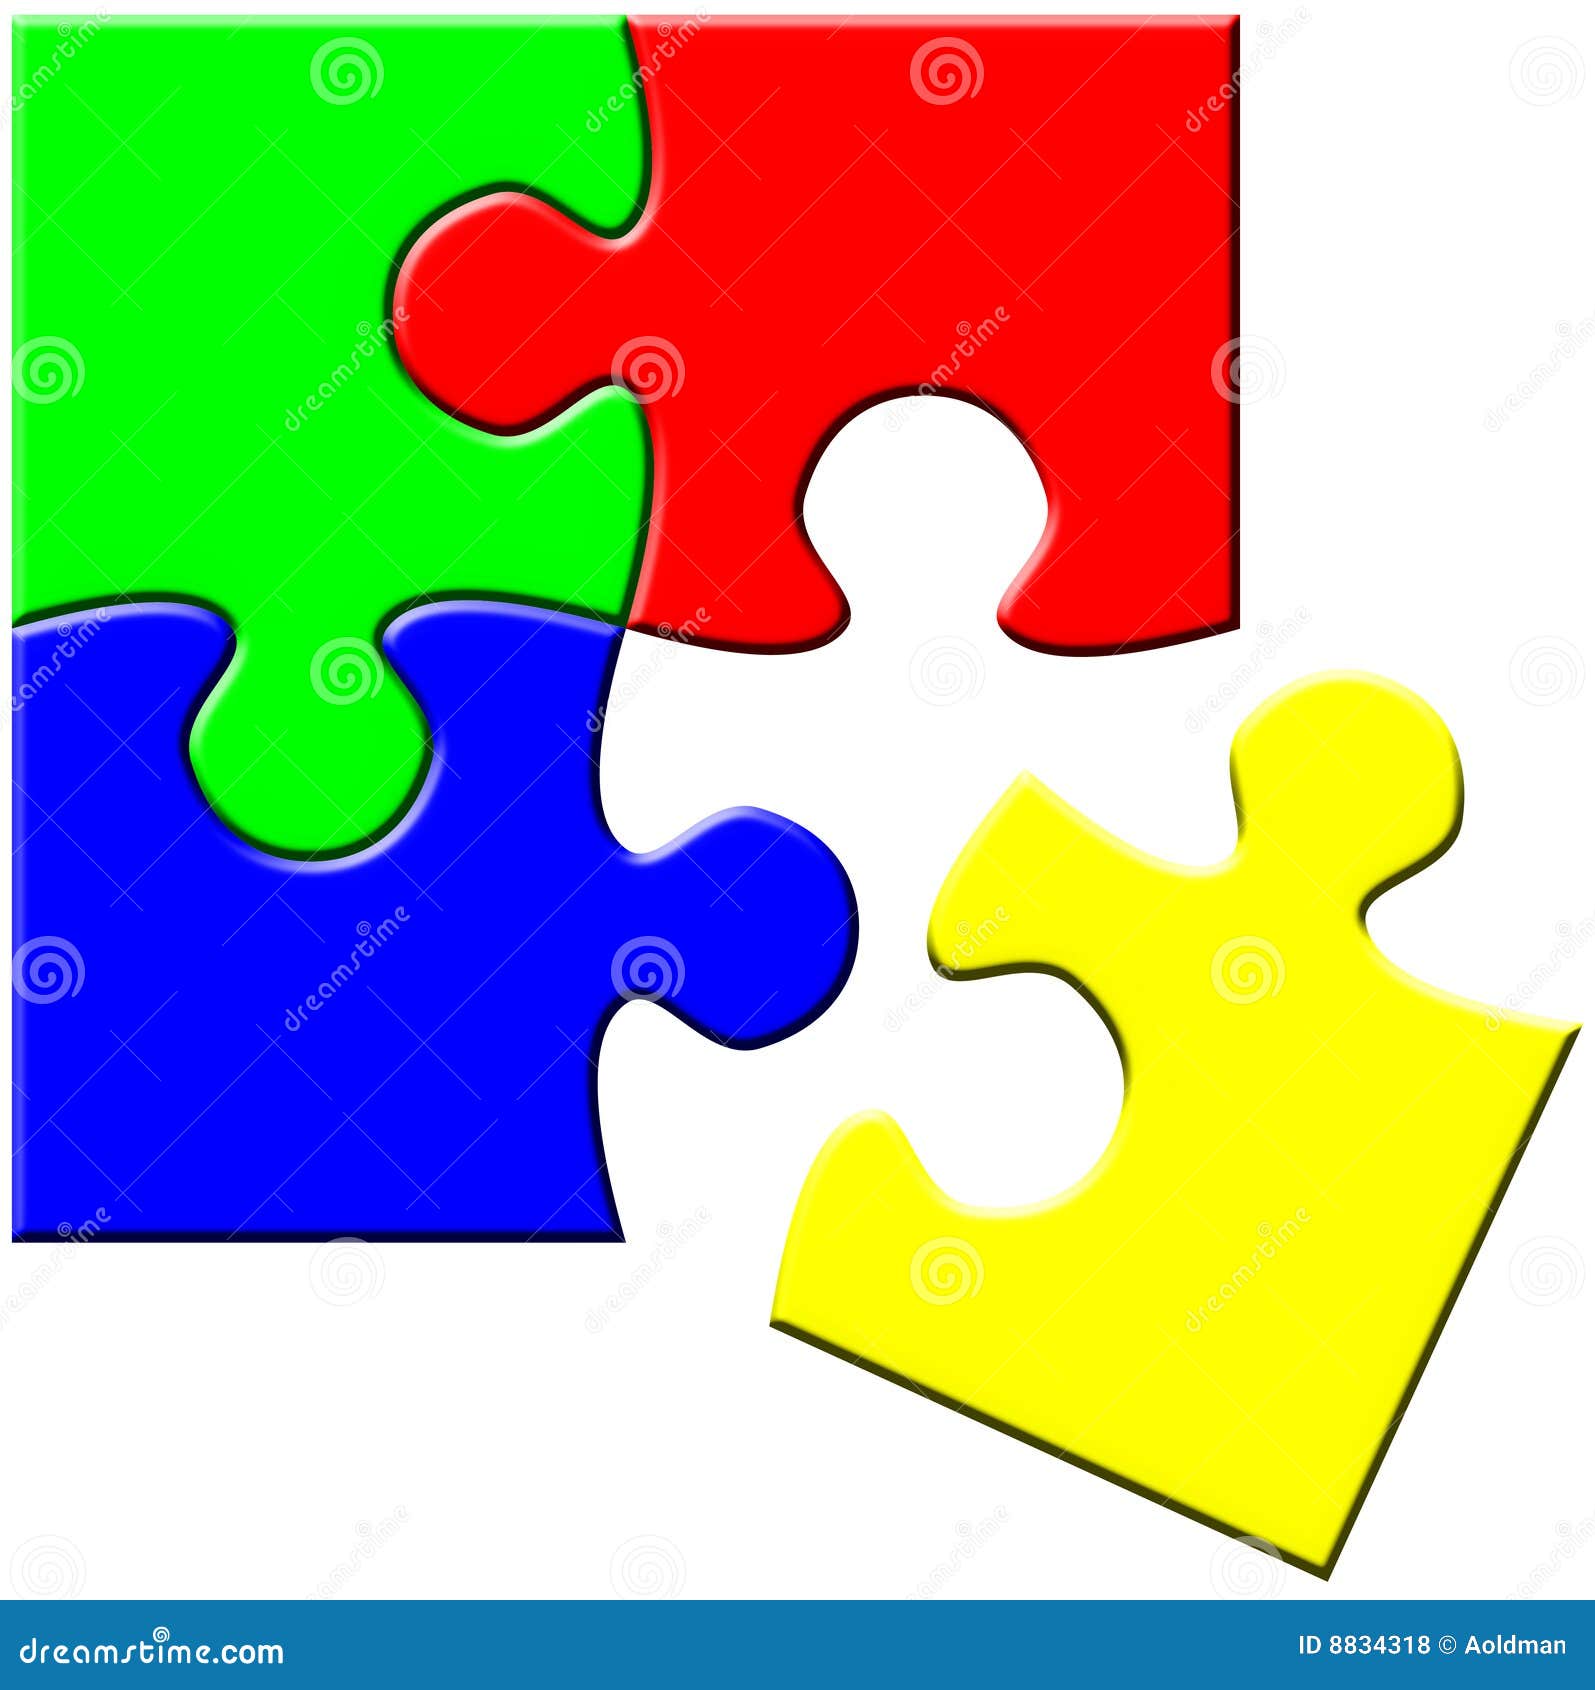 simple-puzzle-8834318.jpg